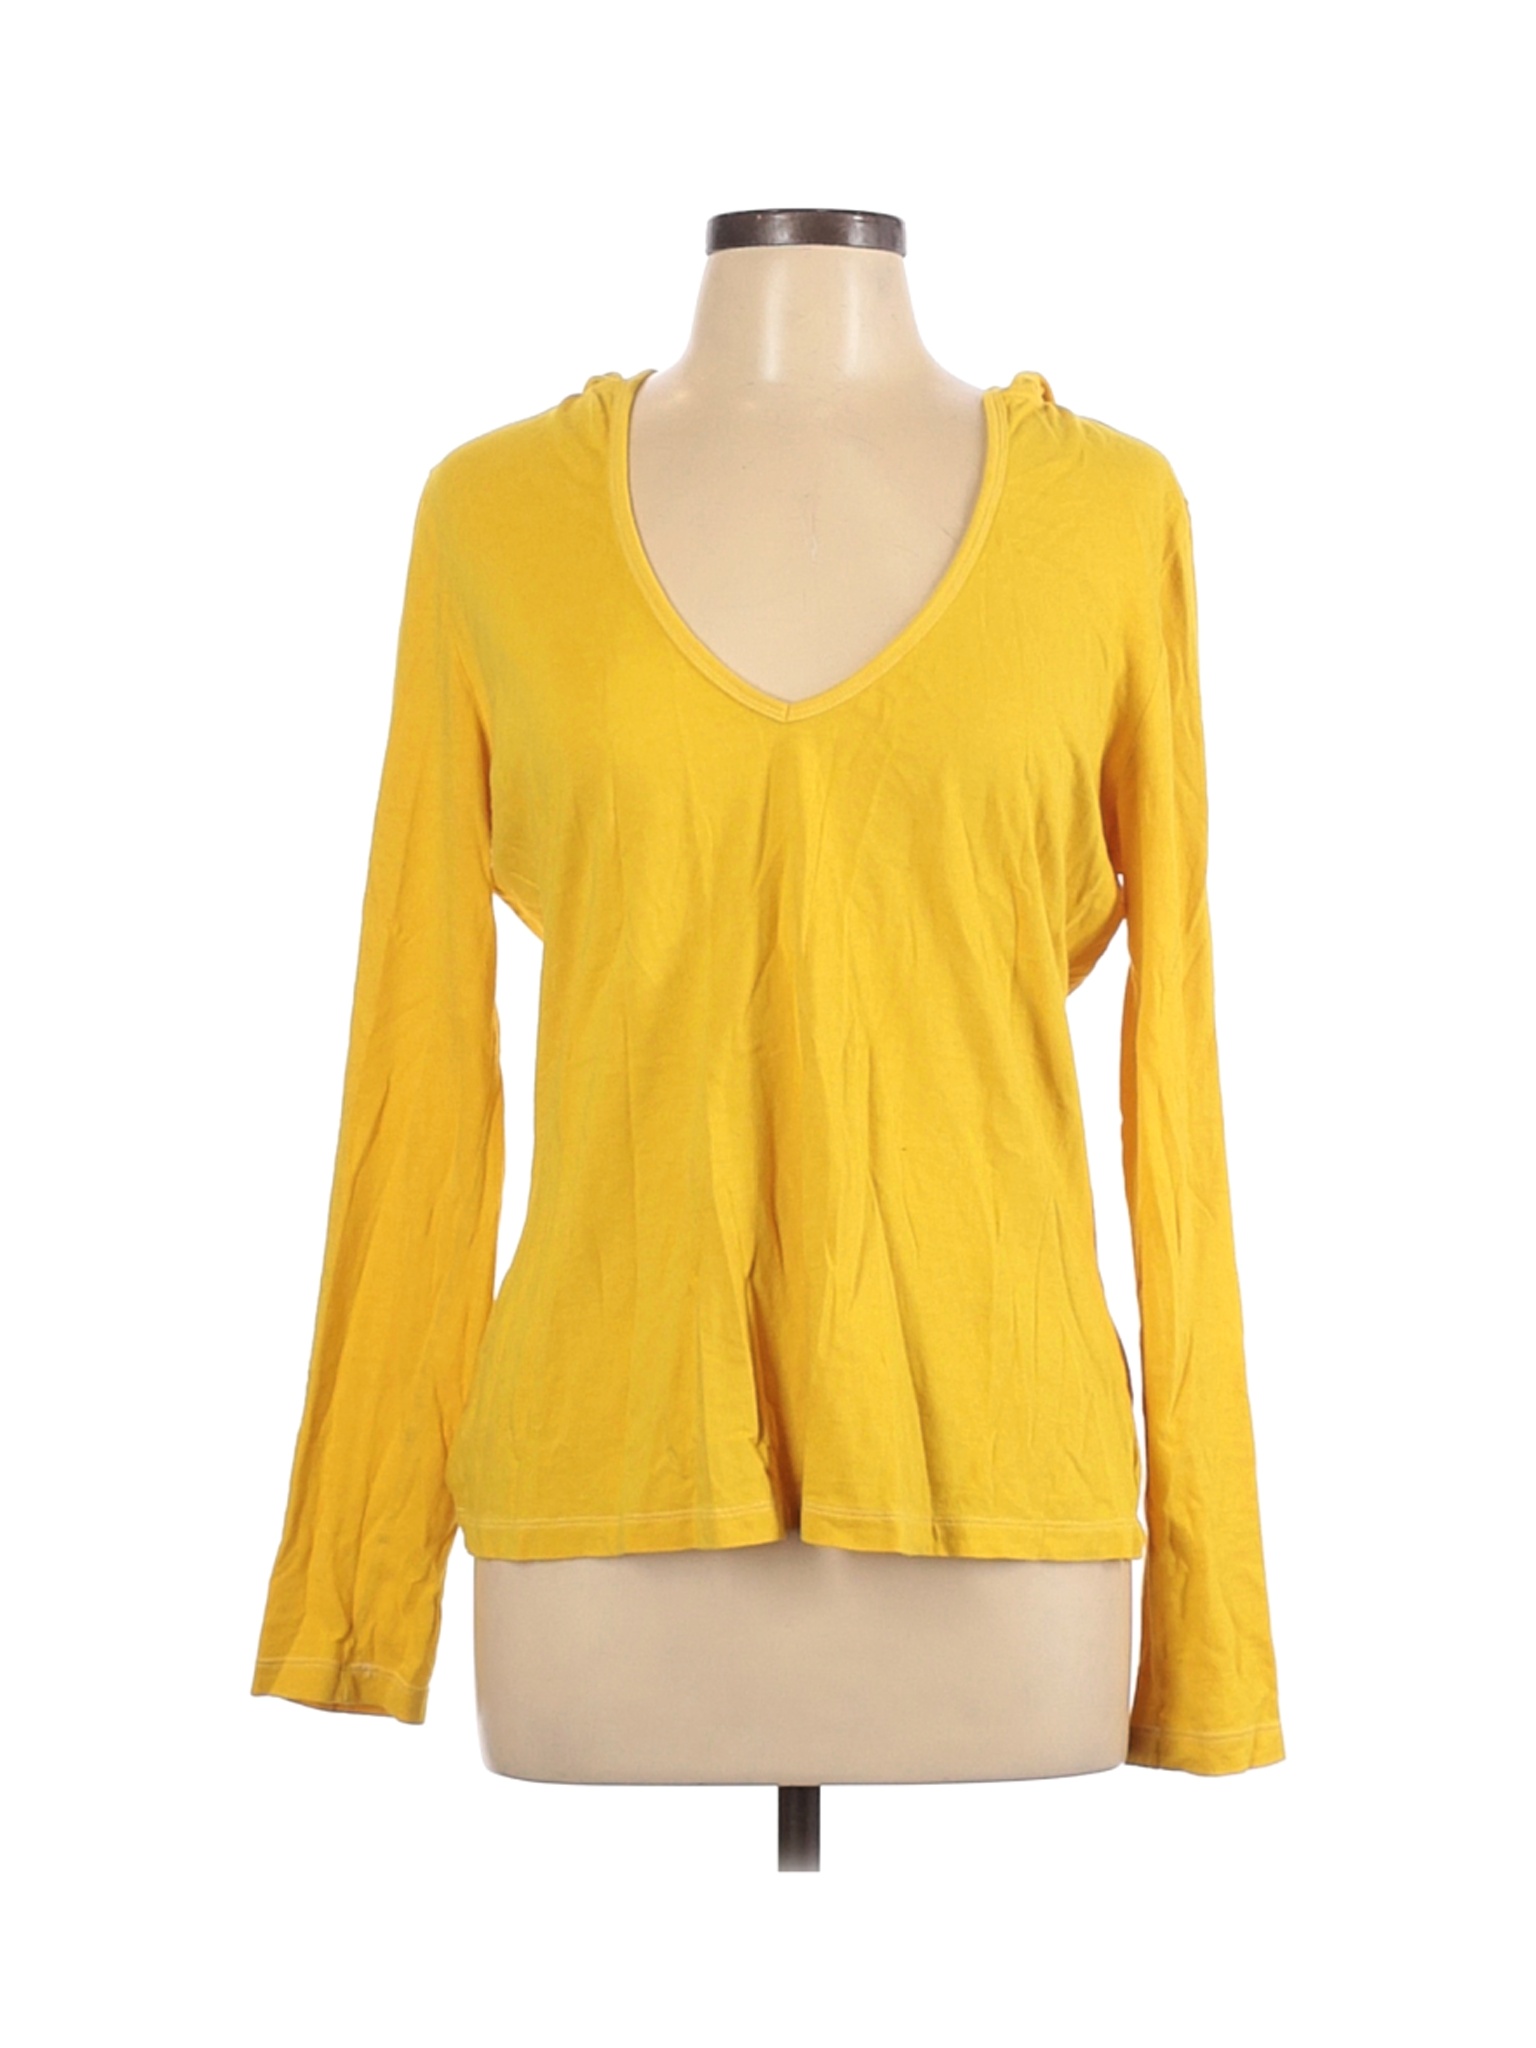 Old Navy Women Yellow Pullover Hoodie L | eBay